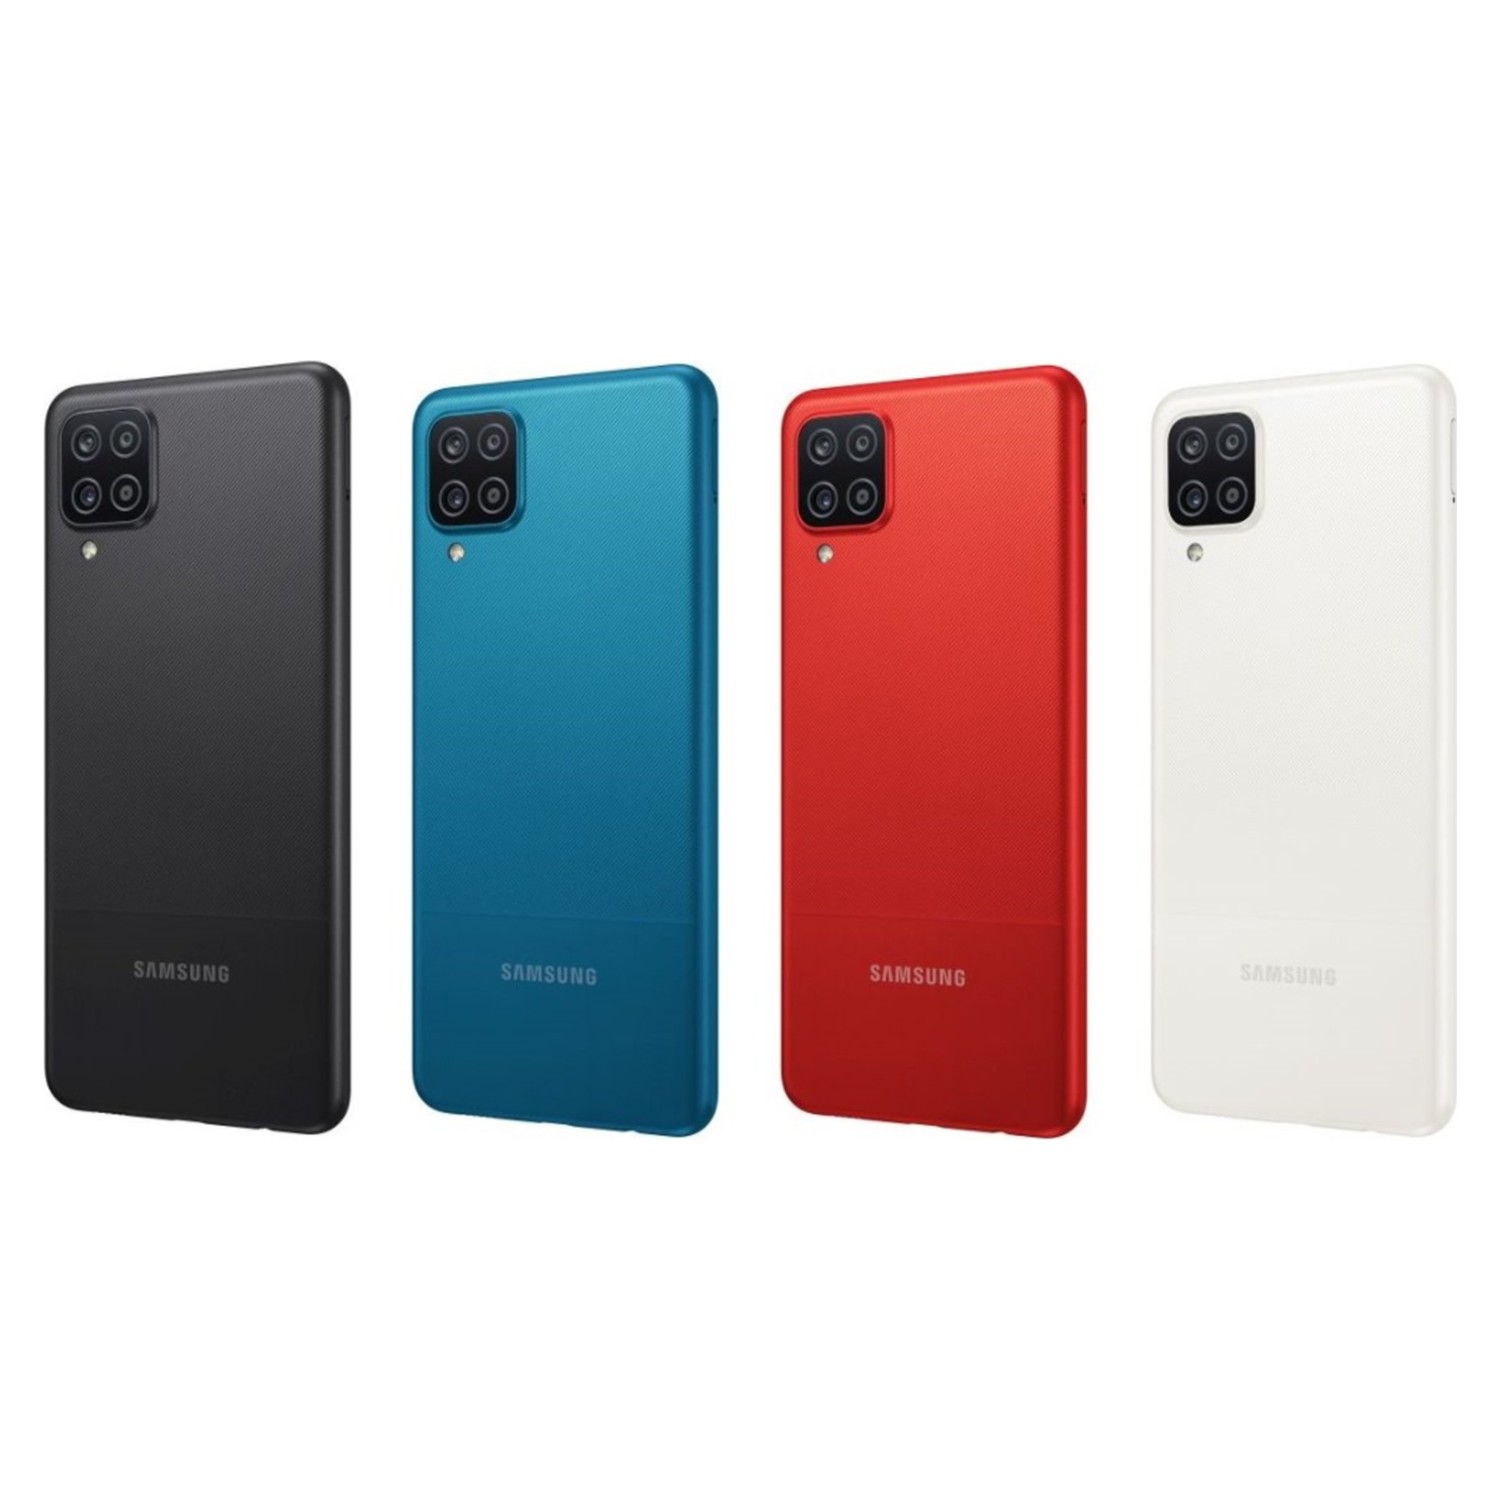 Samsung Galaxy A12 64 GB (Samsung Türkiye Garantili)